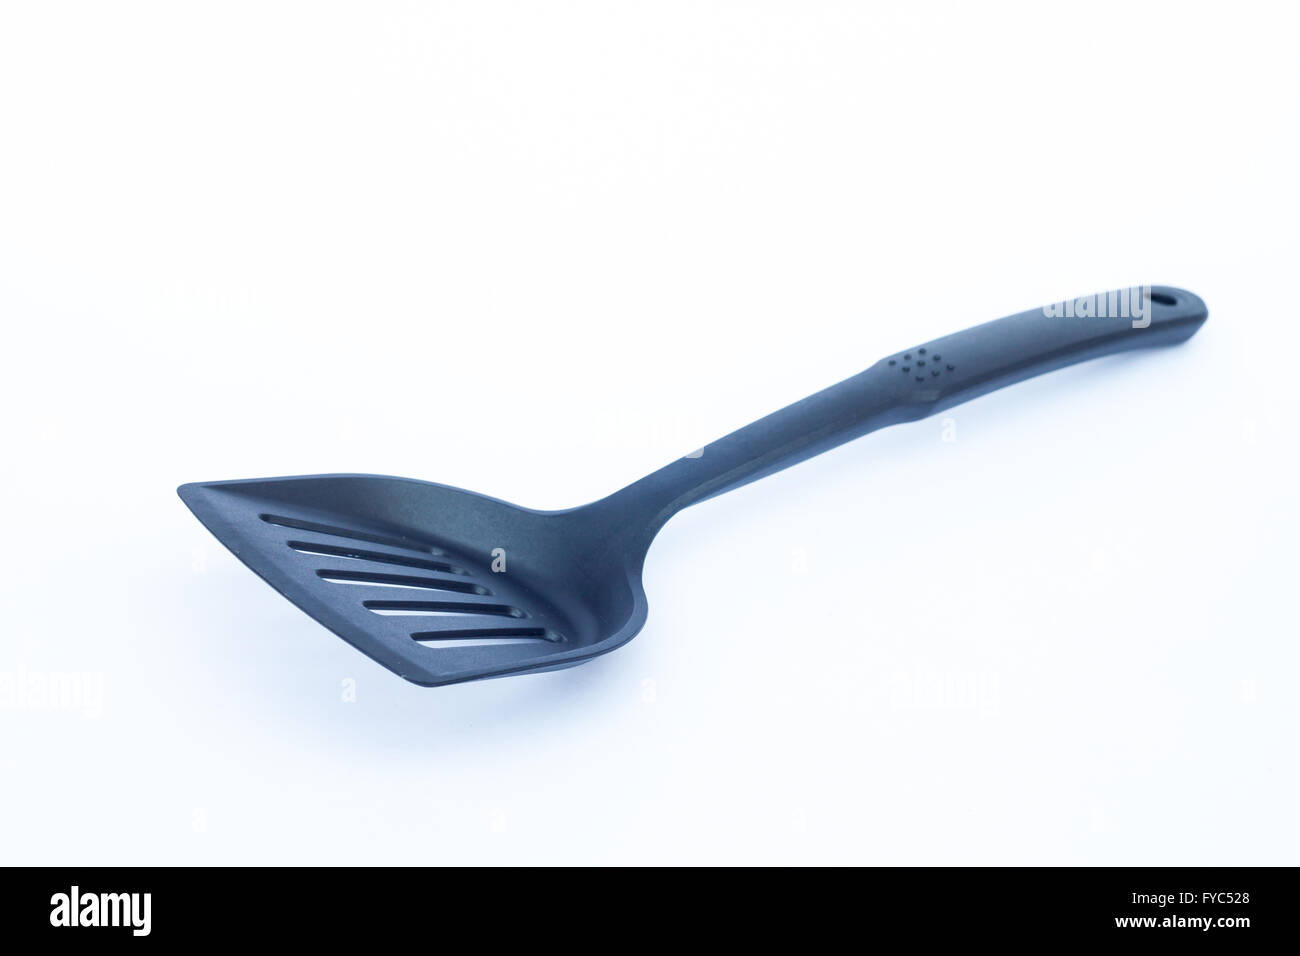 https://c8.alamy.com/comp/FYC528/black-plastic-kitchen-spatula-on-white-background-stock-photo-FYC528.jpg